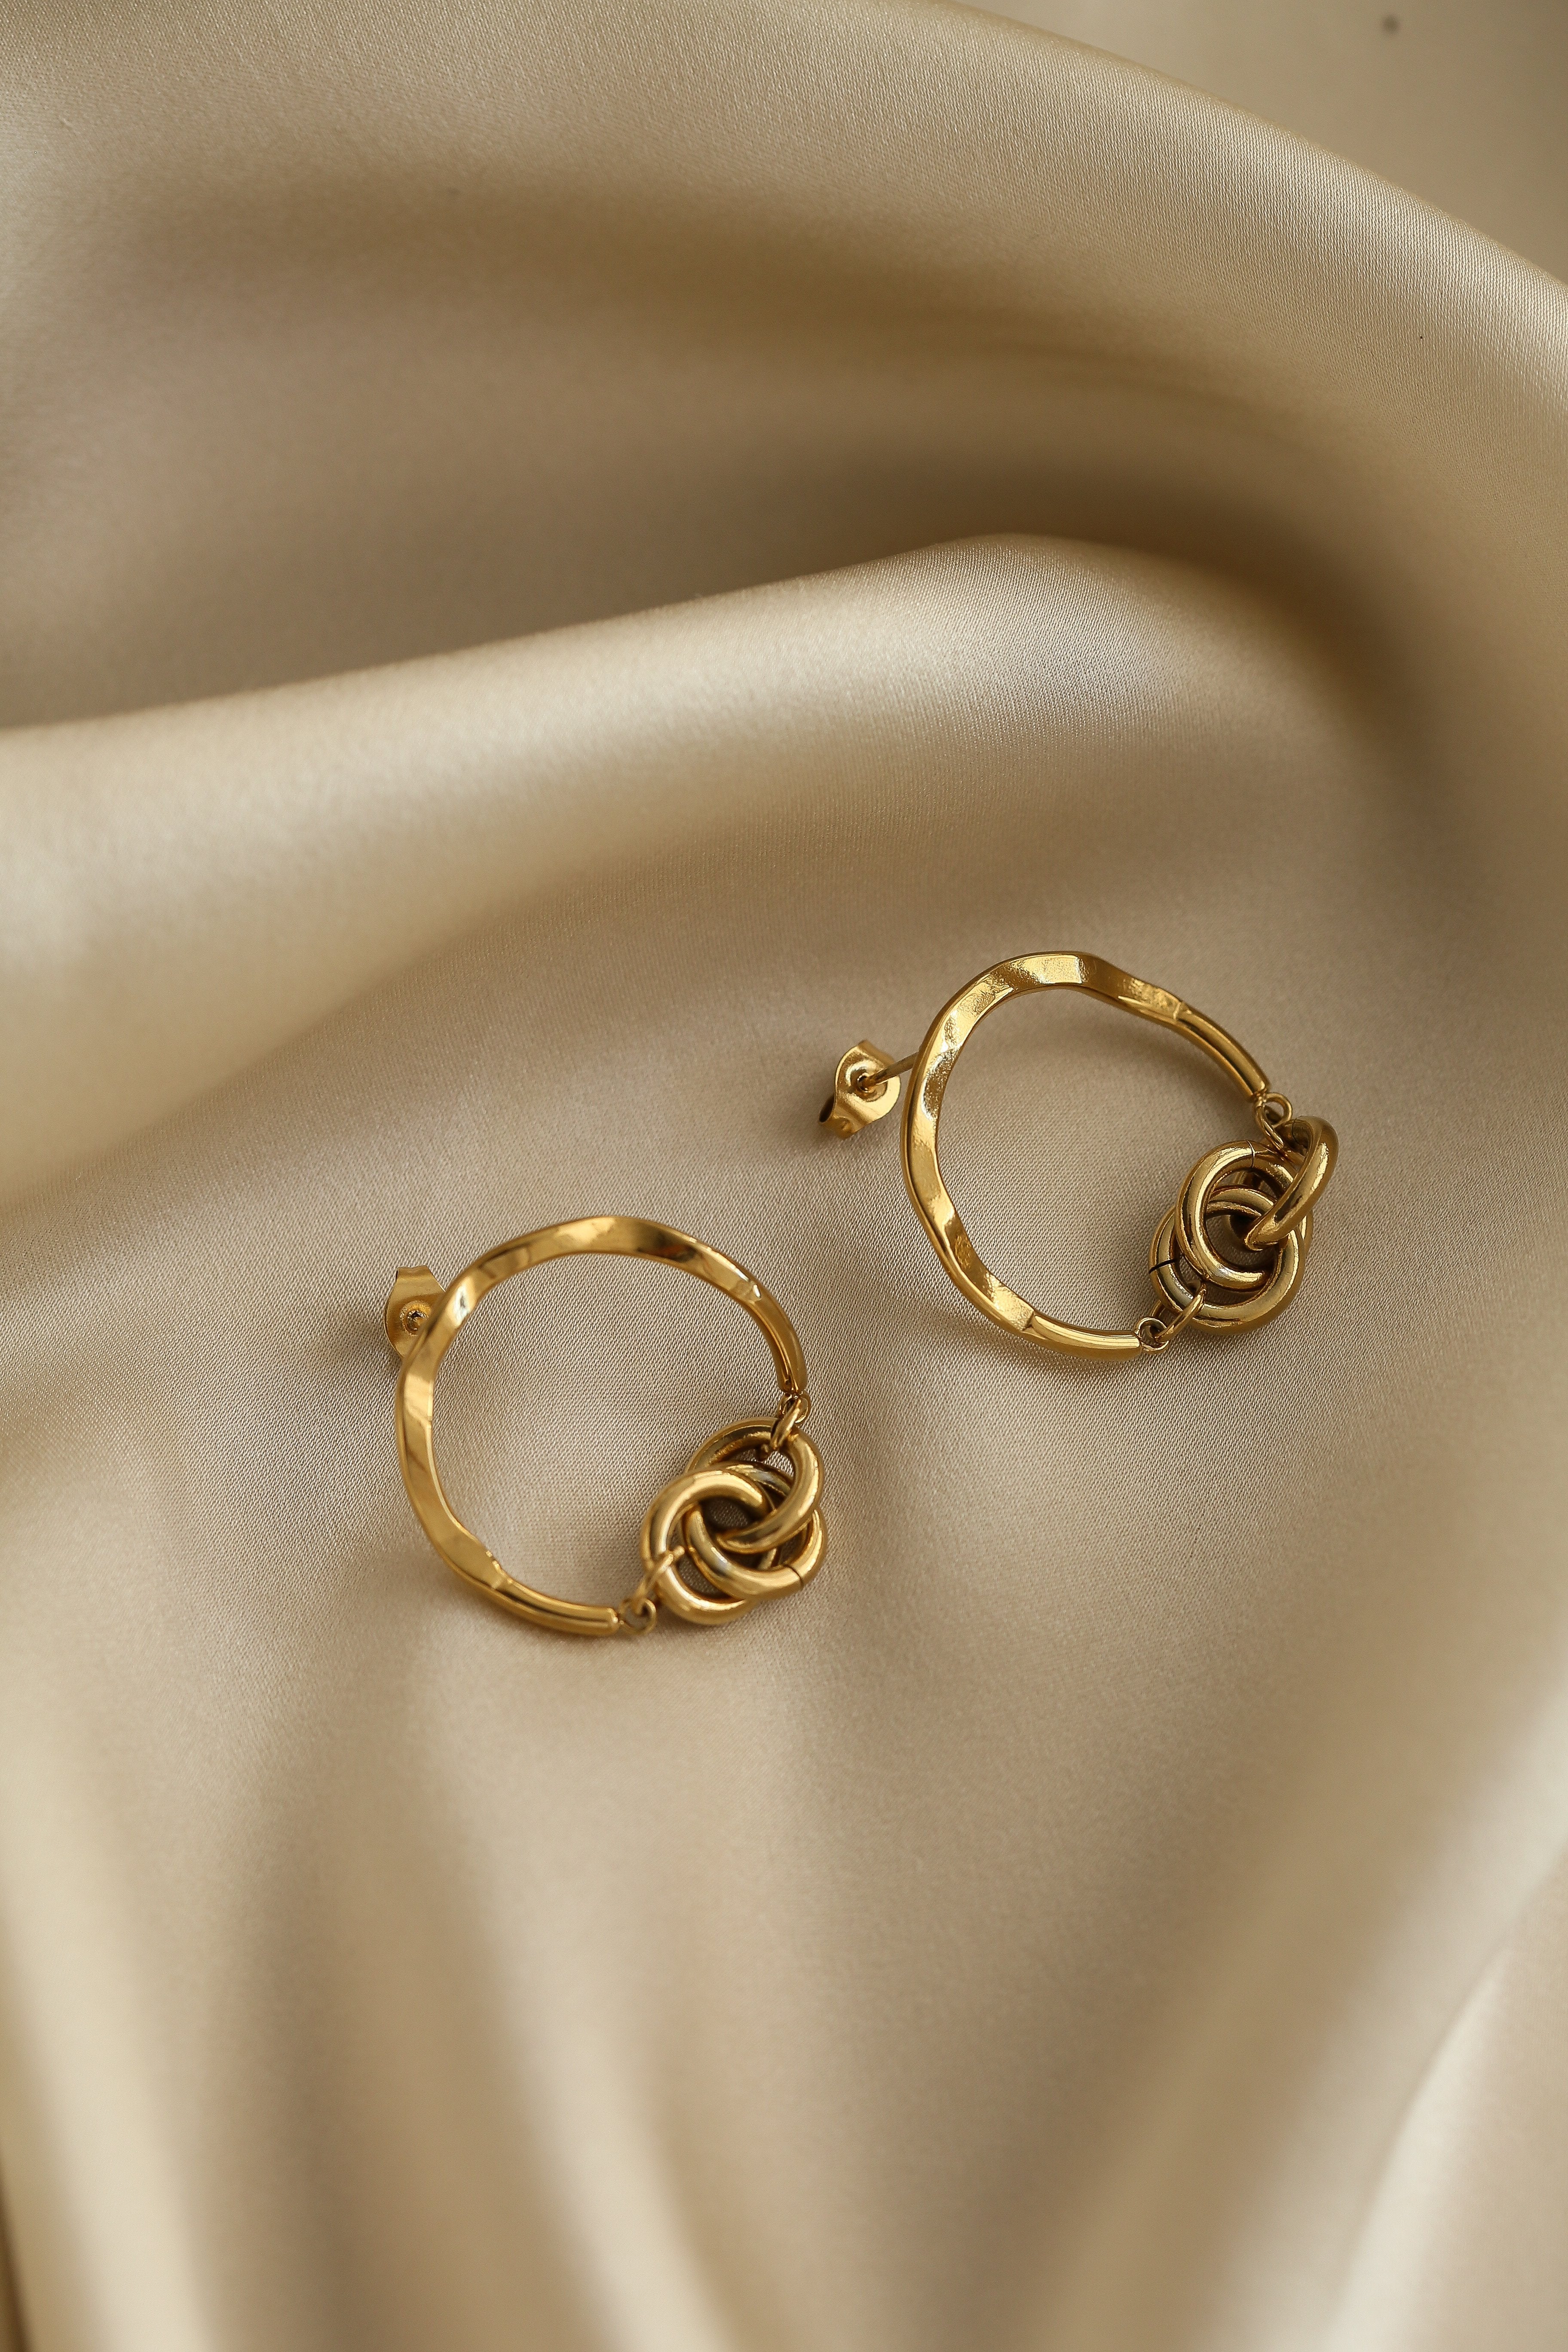 Heaven Earrings - Boutique Minimaliste has waterproof, durable, elegant and vintage inspired jewelry